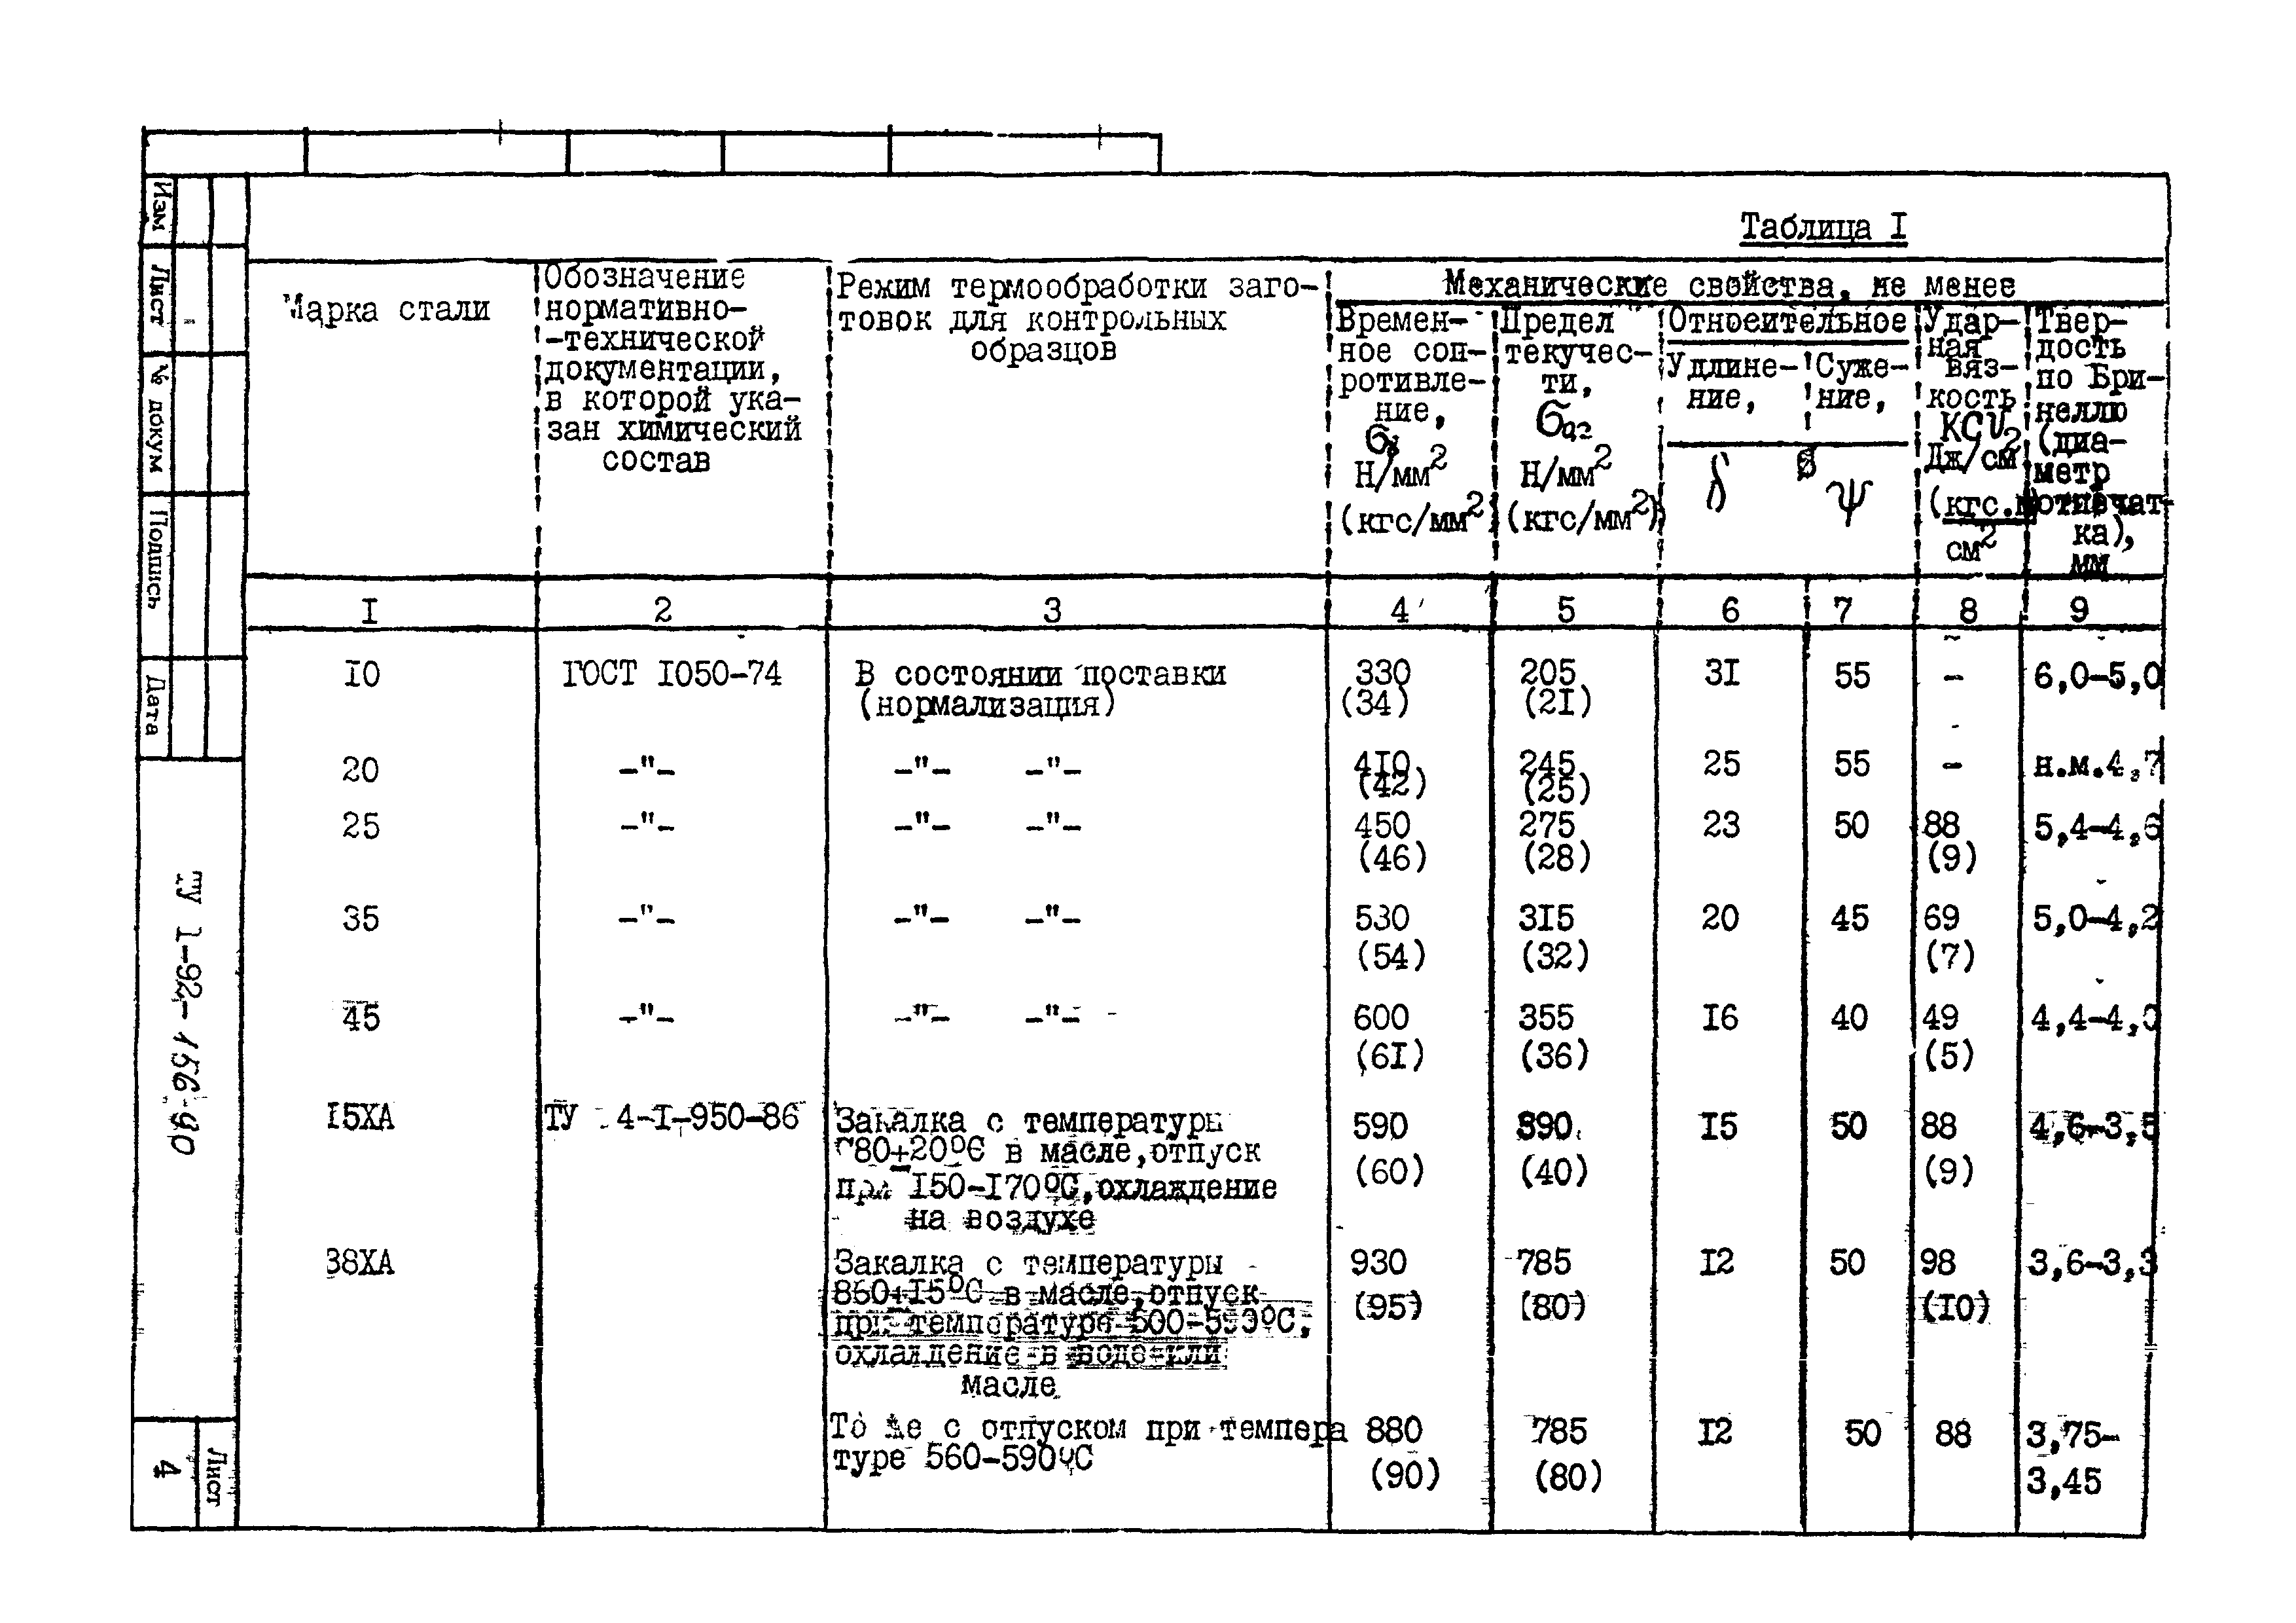 ТУ 1-92-156-90